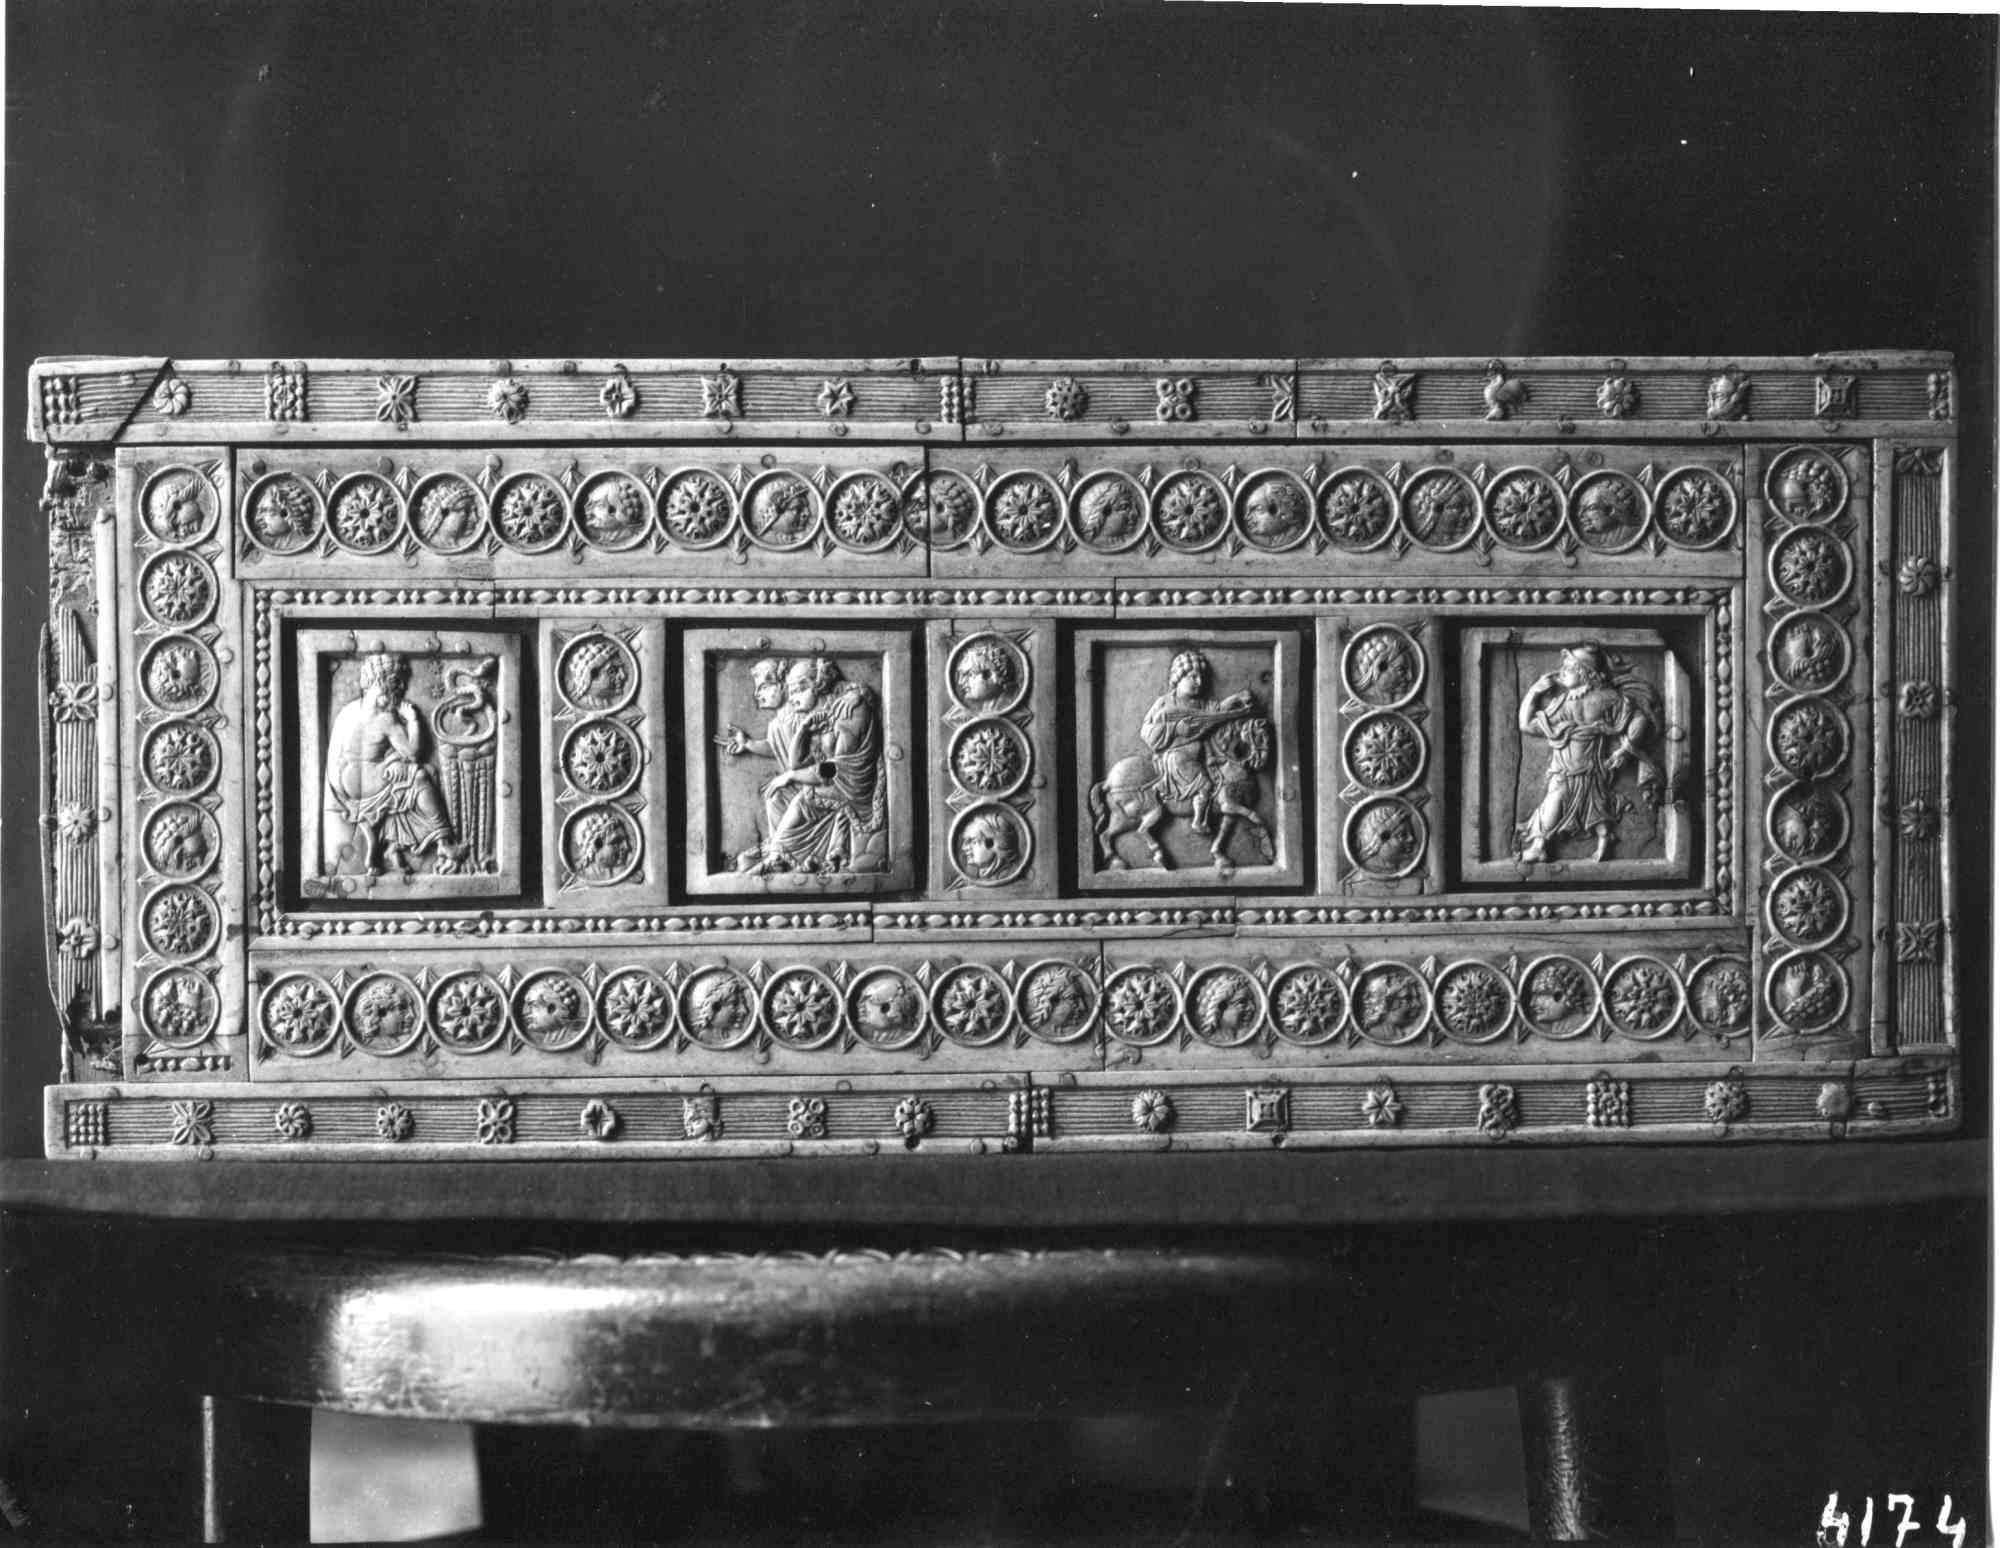 Osvaldo Böhm Black and White Photograph - Byzantine Relief - Vintage Photo Detail by Osvaldo Bohm - Early 20th Century